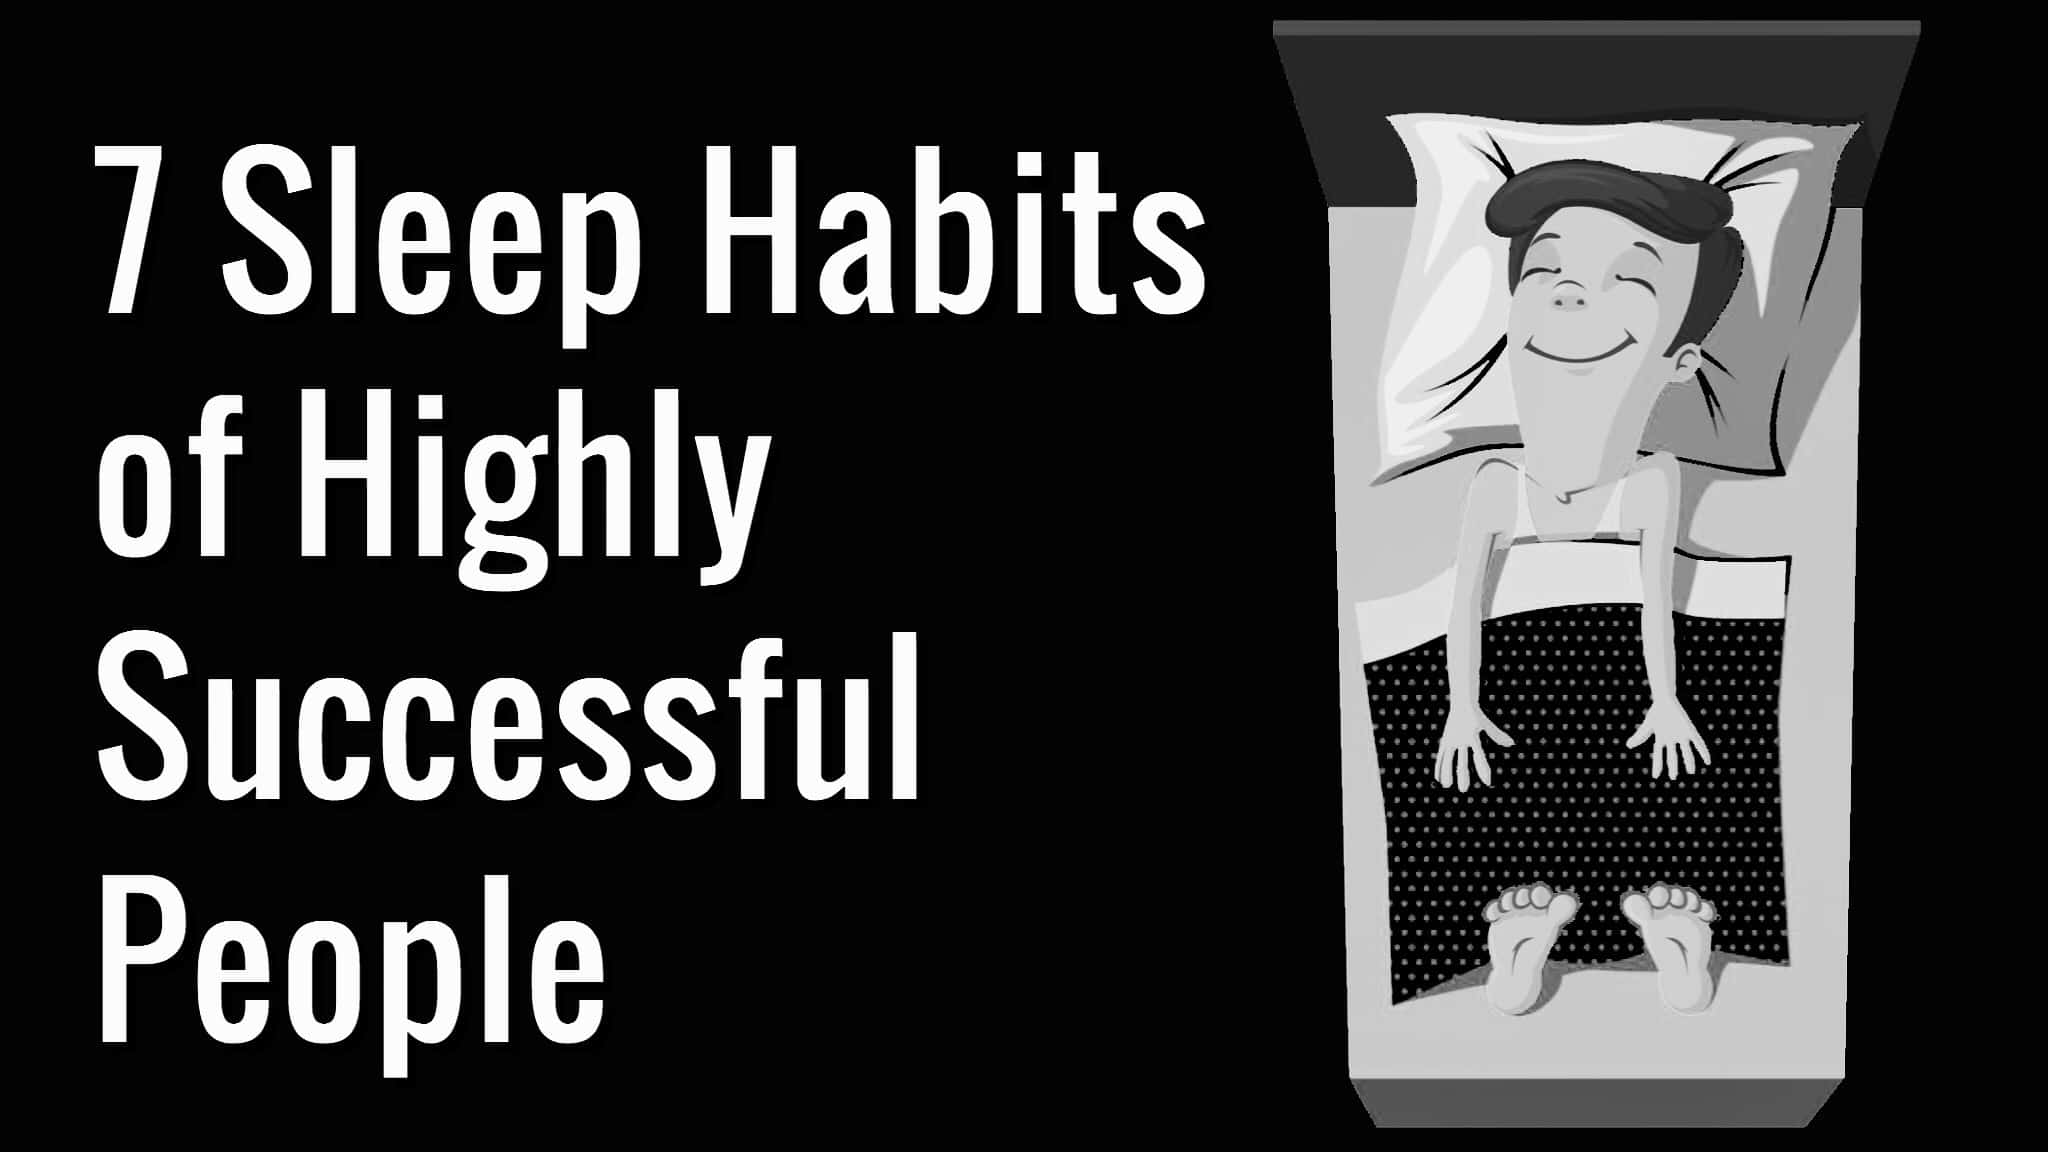 7 Sleep Habits of Highly Successful People